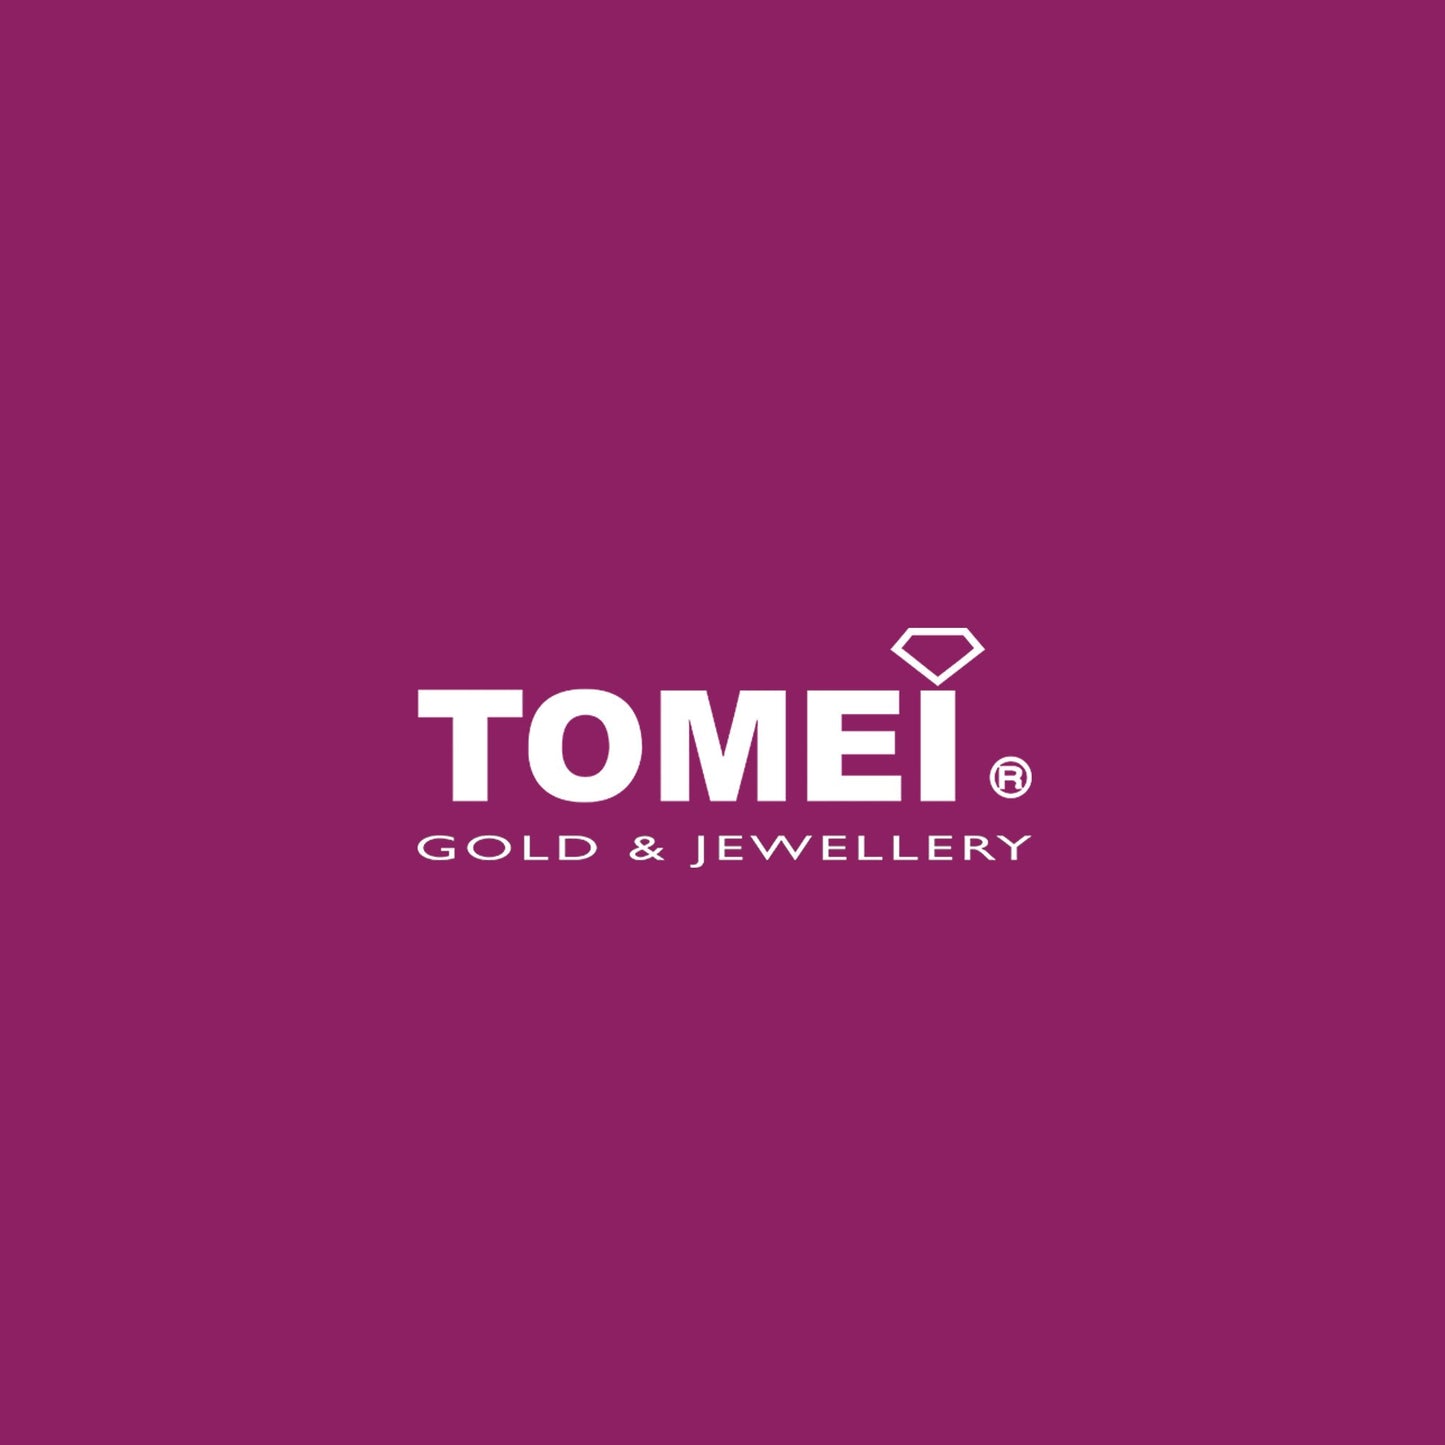 TOMEI Bonnie Earrings, White Gold 750 (E1897)